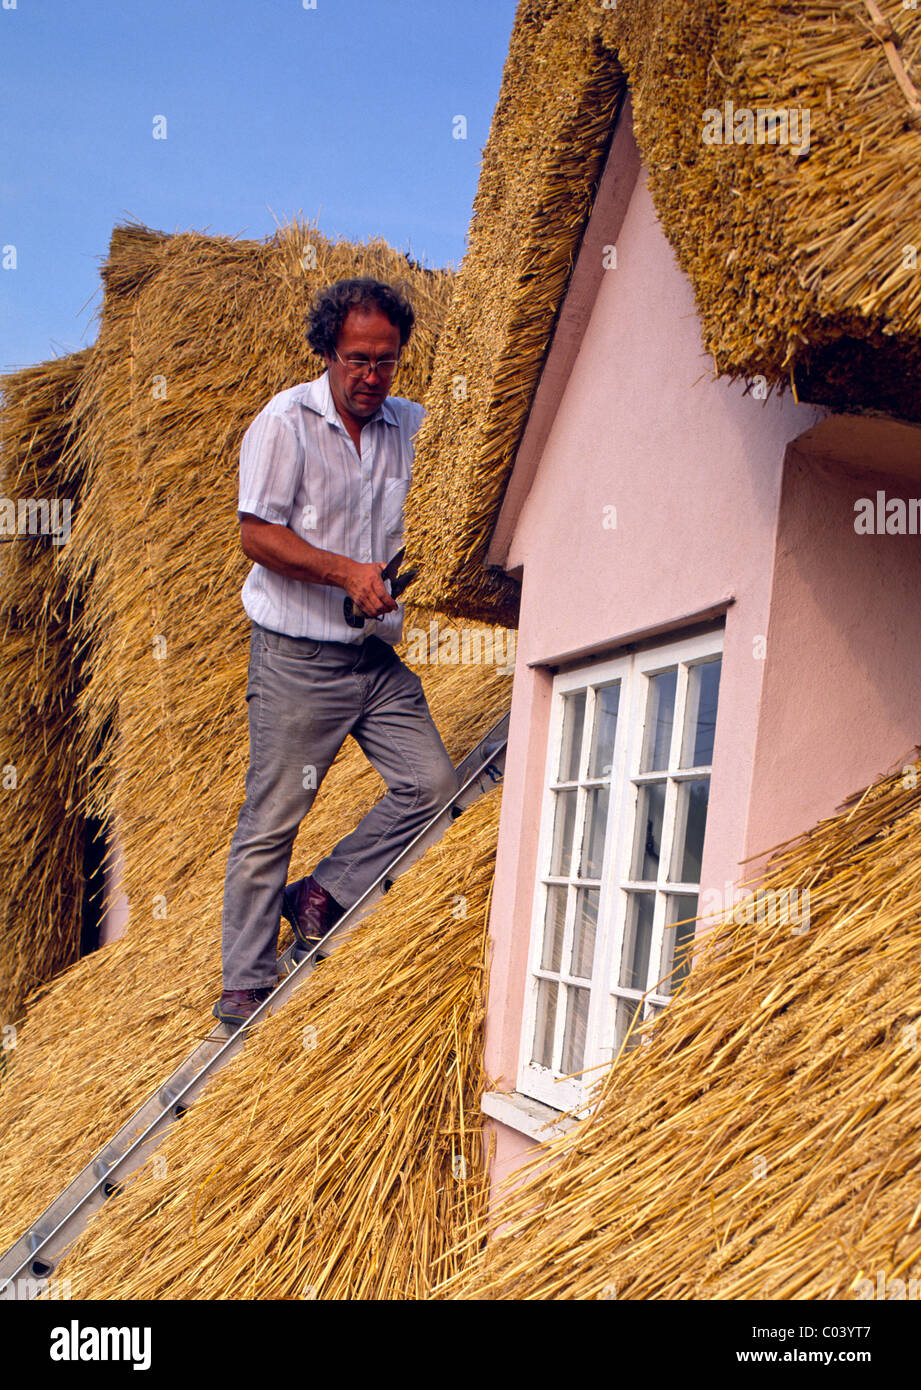 England, Oxfordshire, Mann thatching Dach Stockfoto